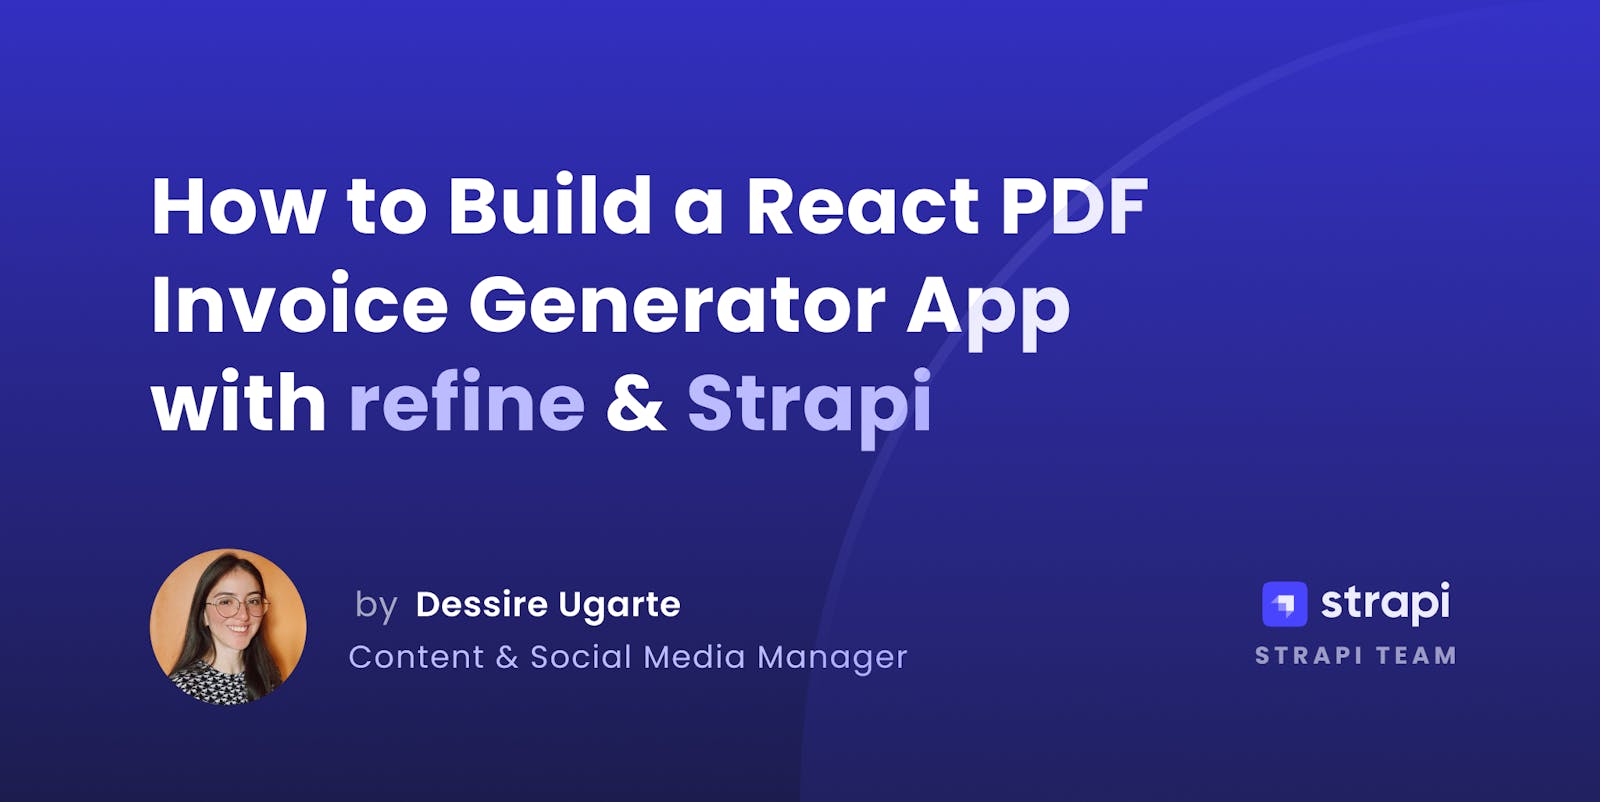 How to Build a React PDF Invoice Generator App with refine & Strapi